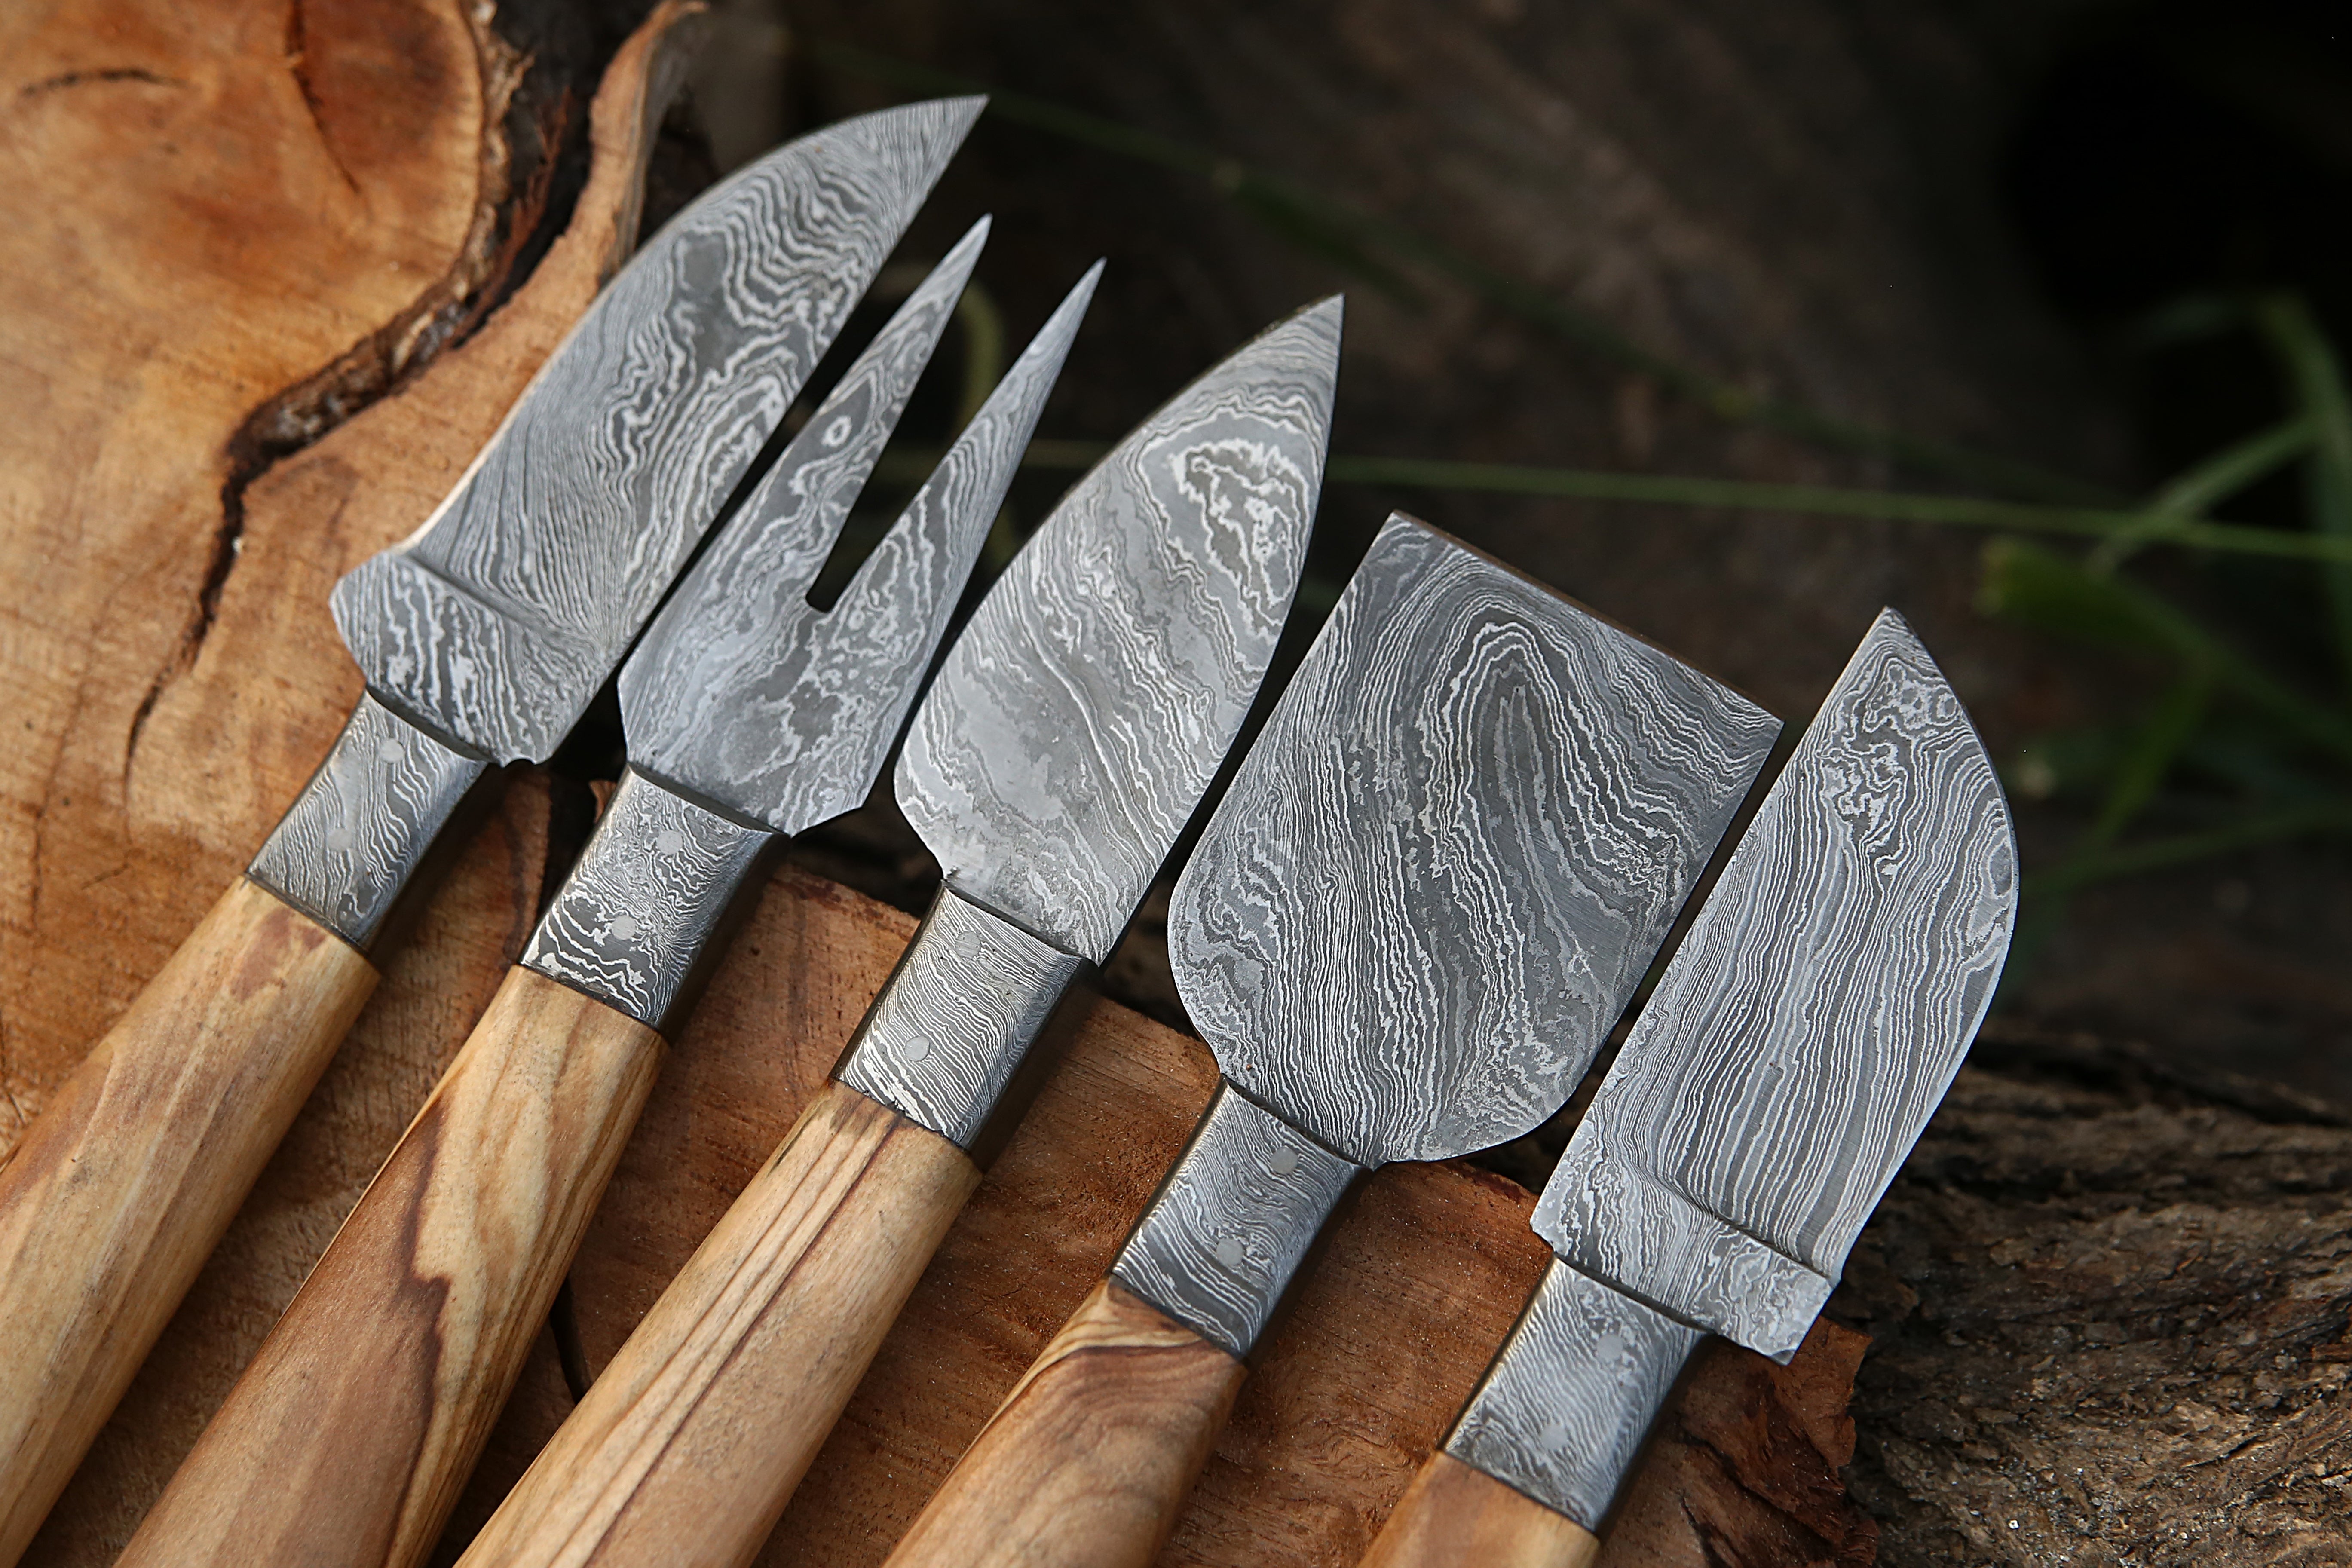 Damascus Steel Chees Knife Set Of 5 PCS Olive Wood Handle Handmade Steak Knife.